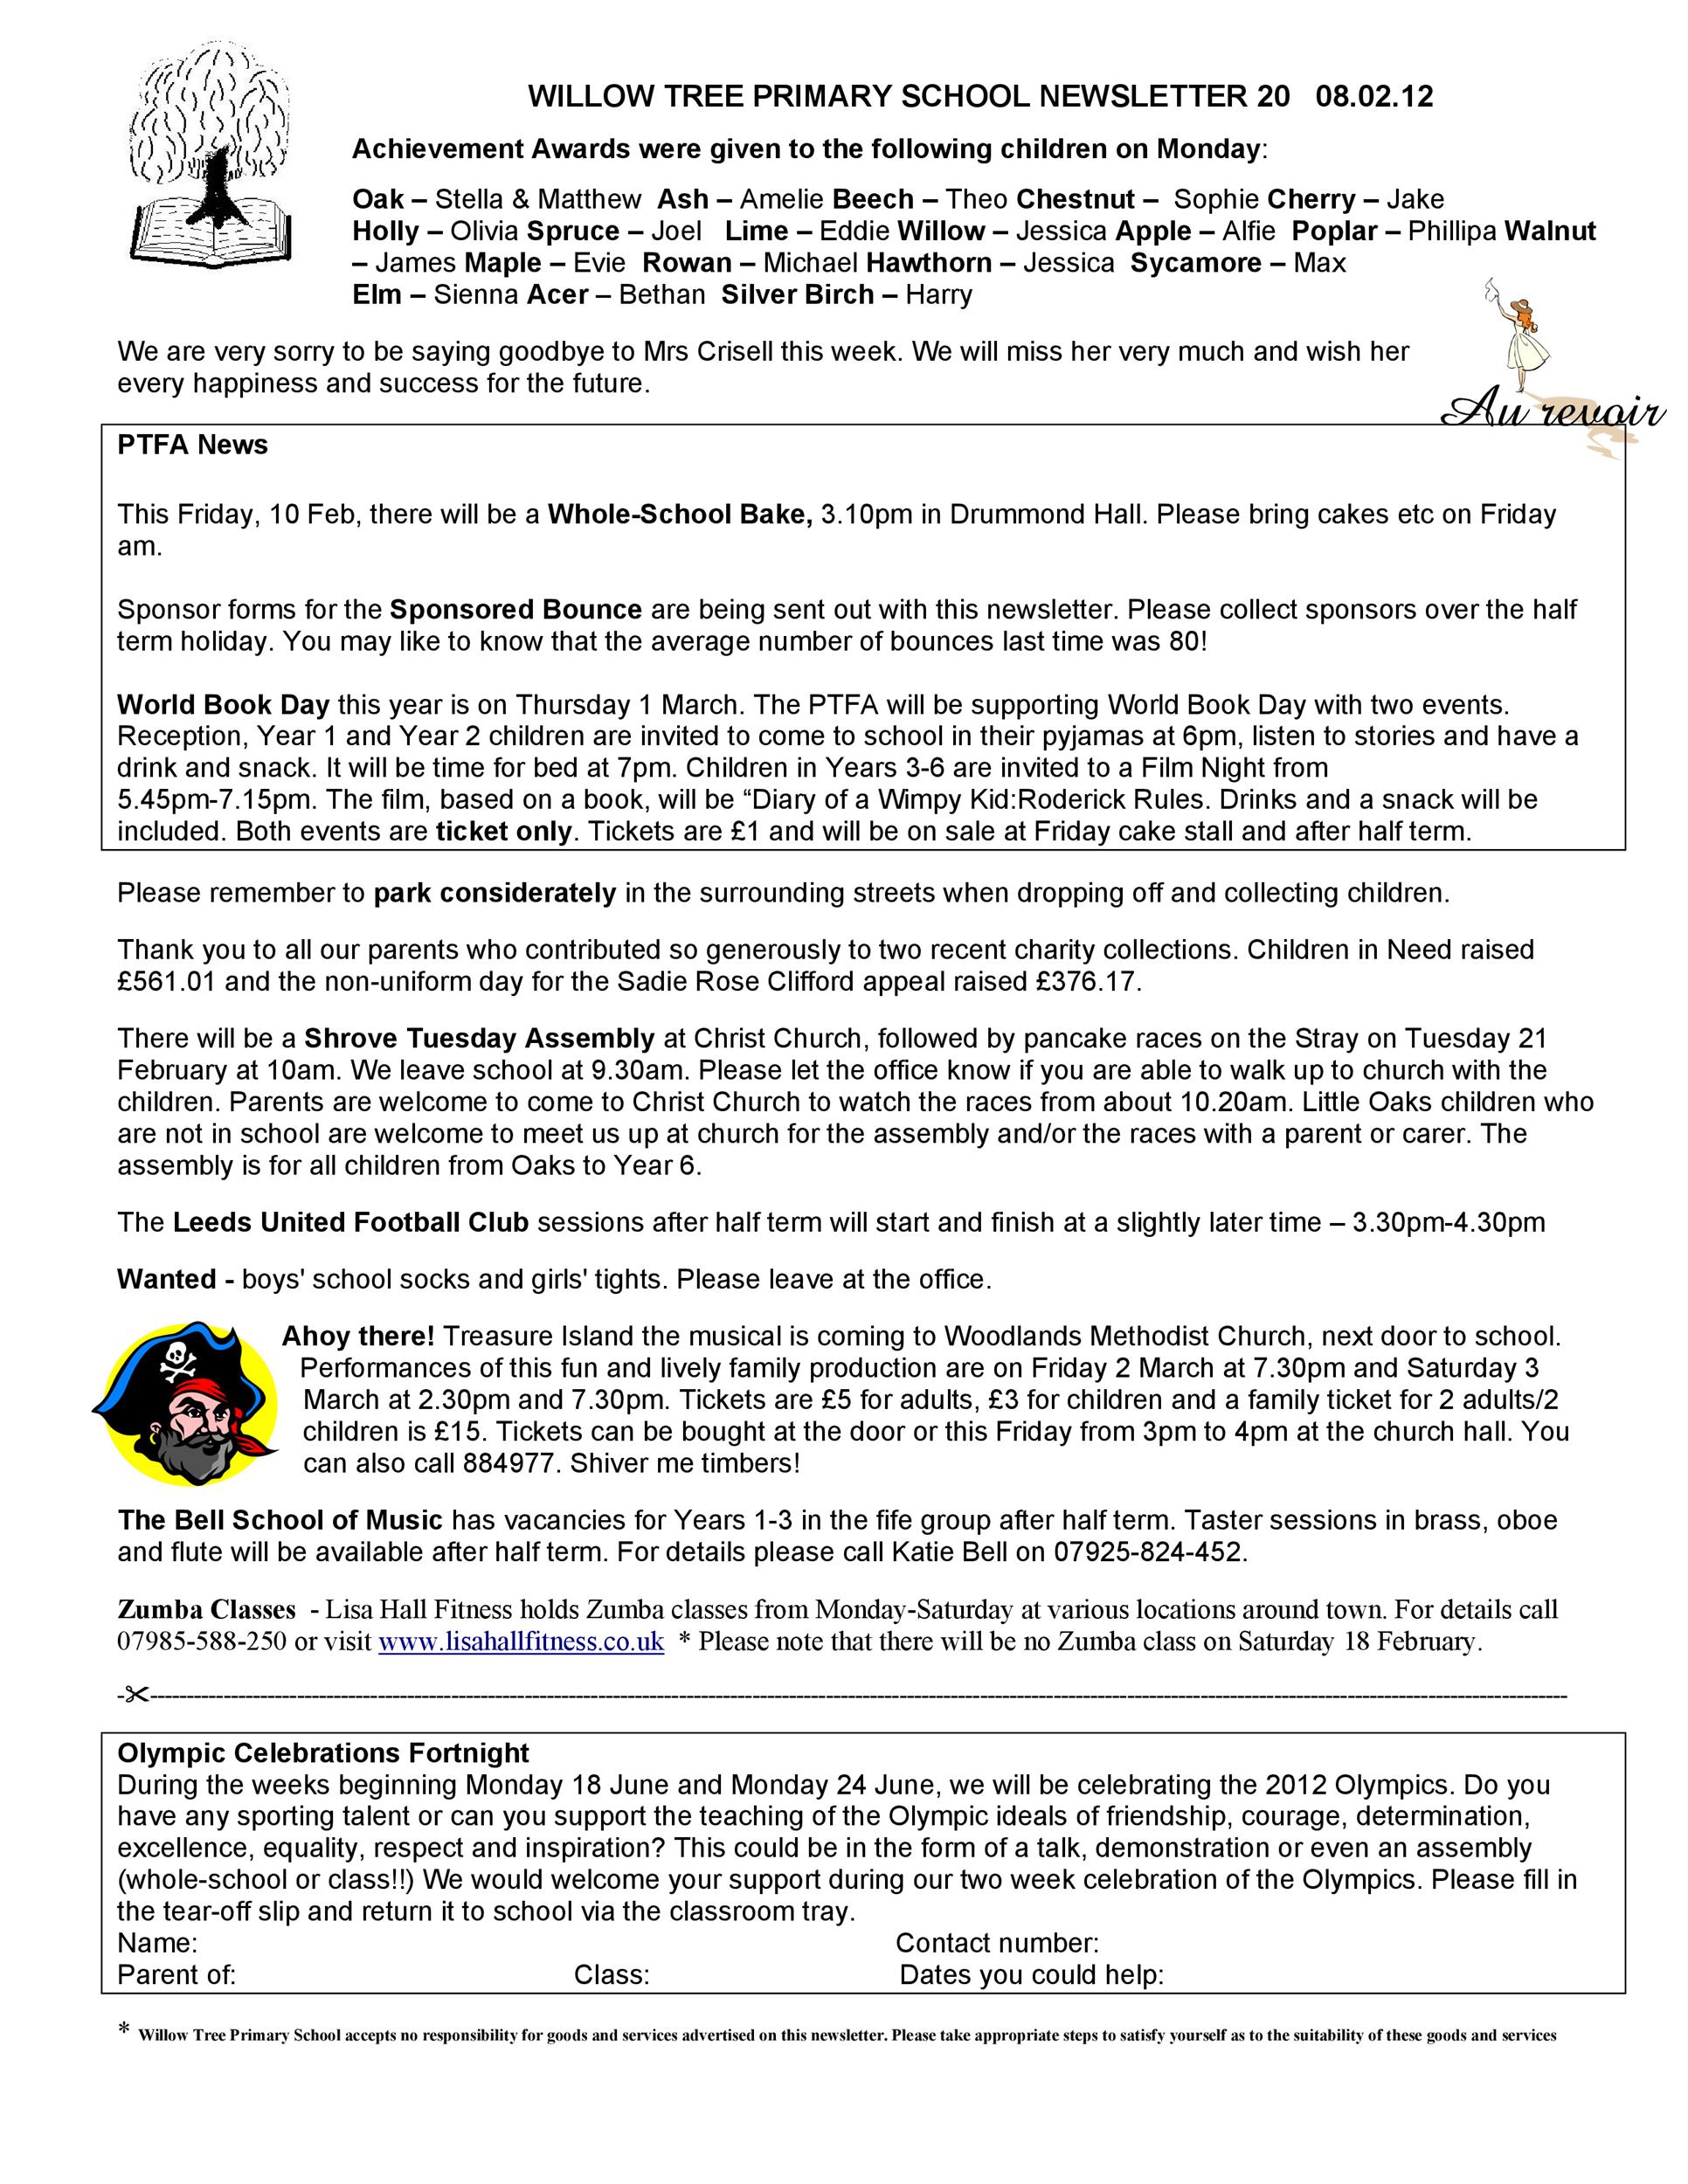 Free preschool newsletter template 49